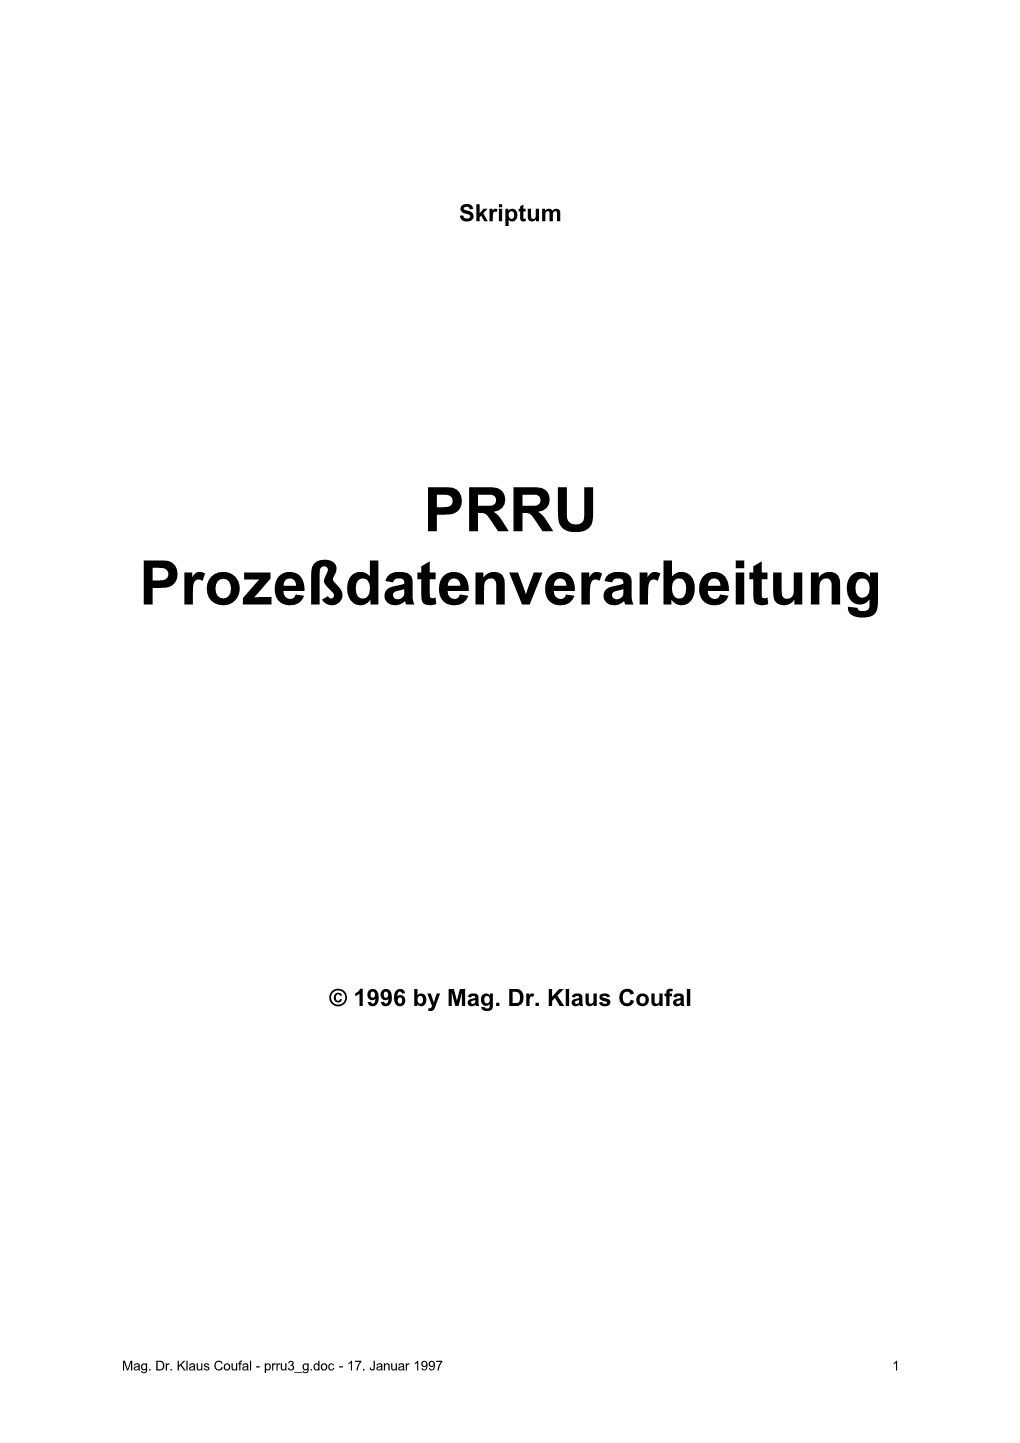 PRRU Prozeßdatenverarbeitung